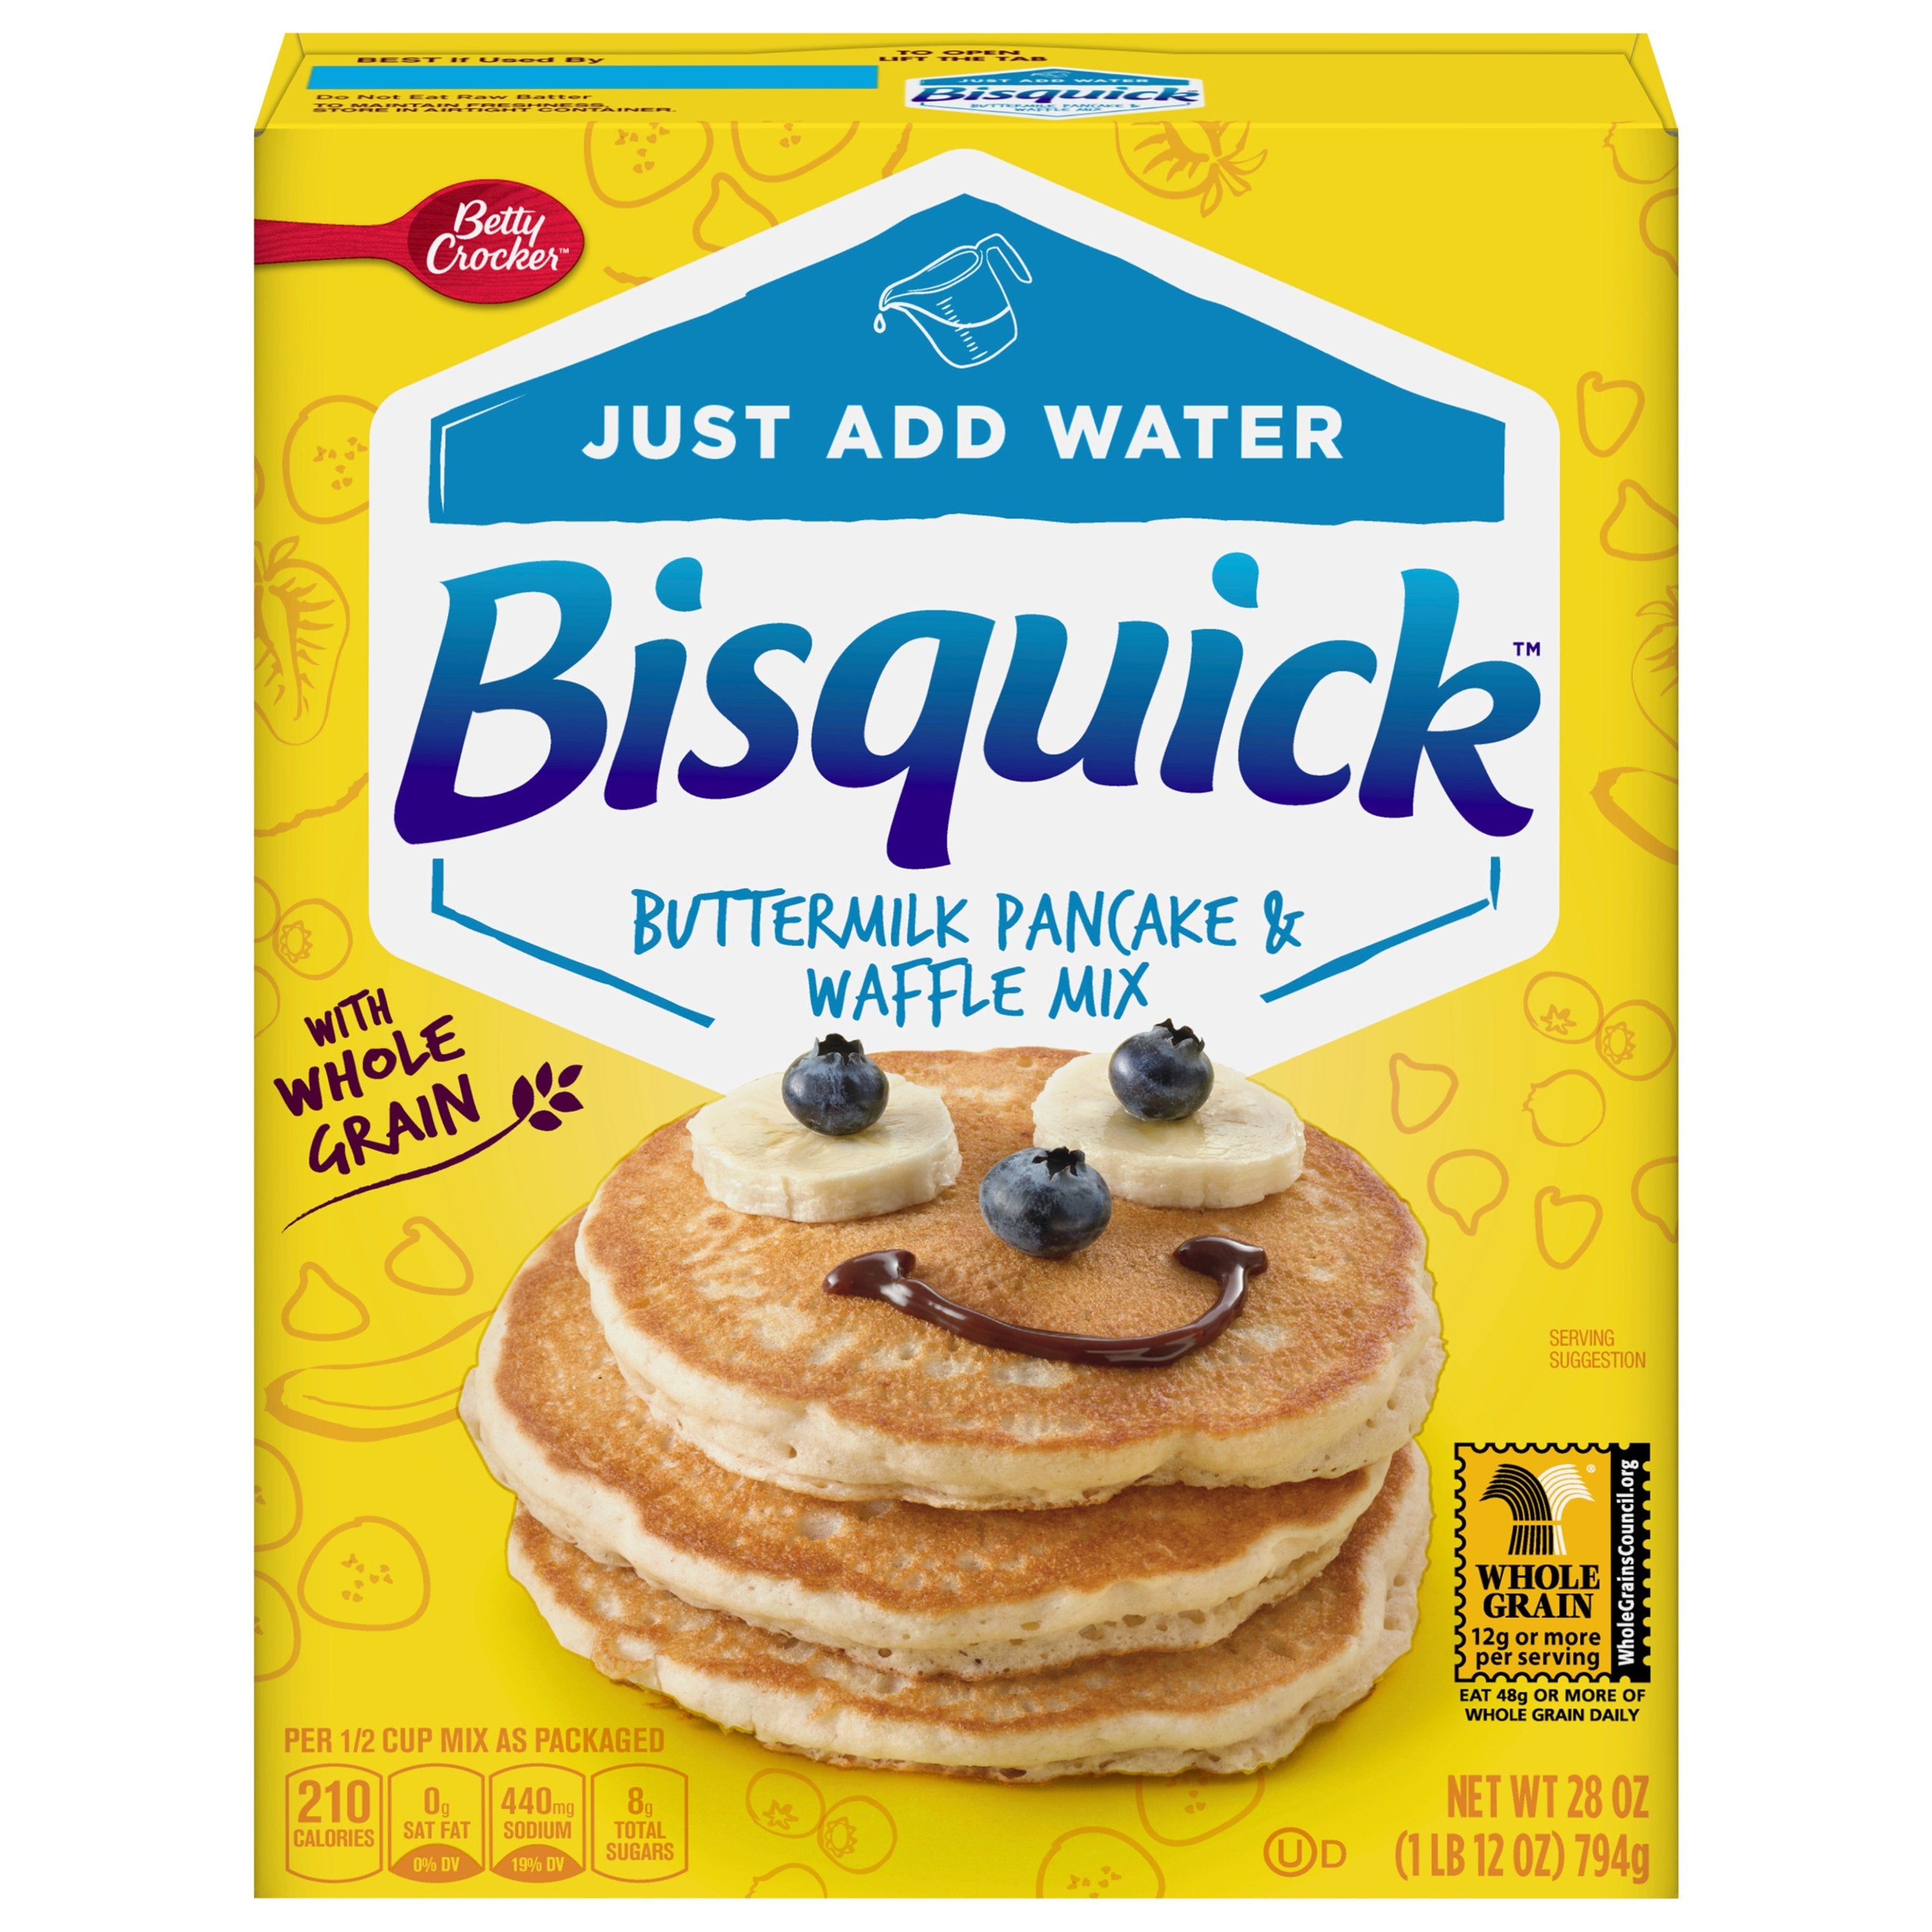 Indgang apparat Hurtig Betty Crocker Bisquick Complete Pancake & Waffle Mix Simply Buttermilk –  StockUpExpress